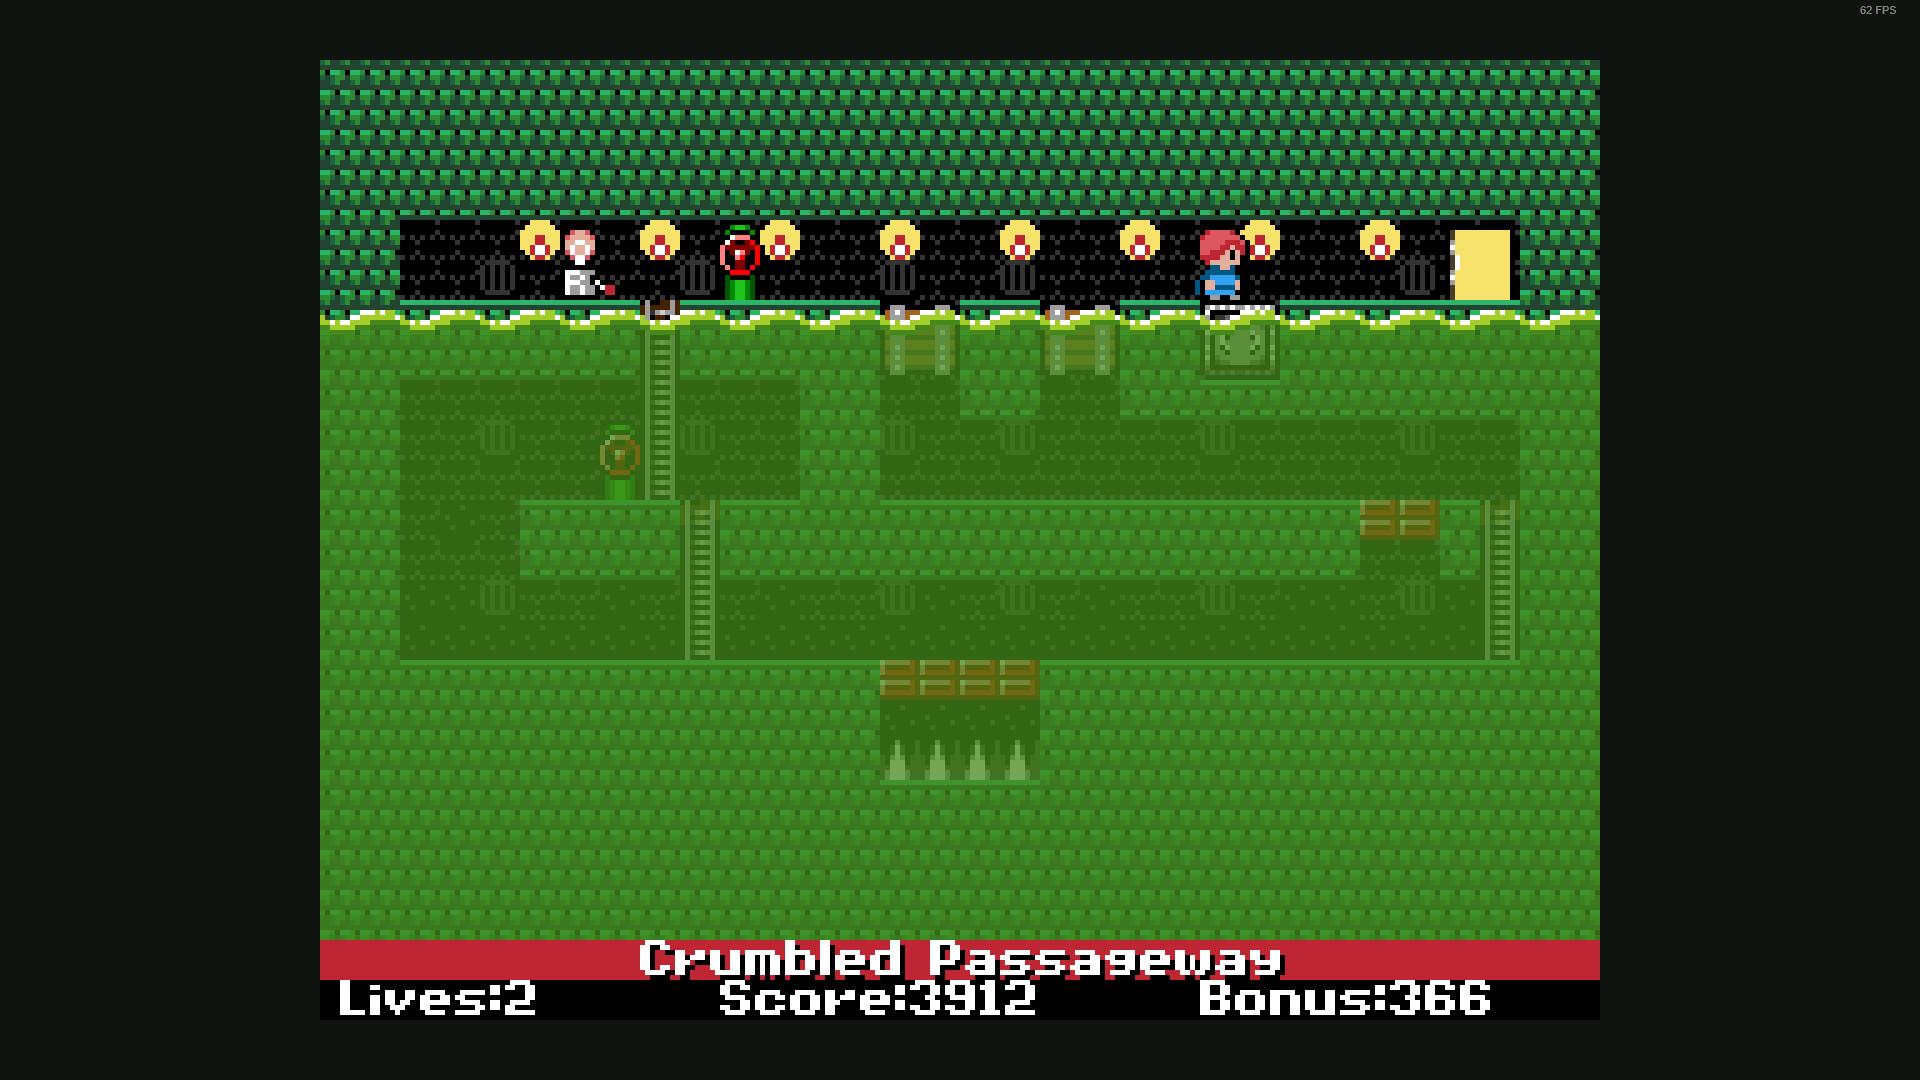 Screenshot №5 from game Rising Runner